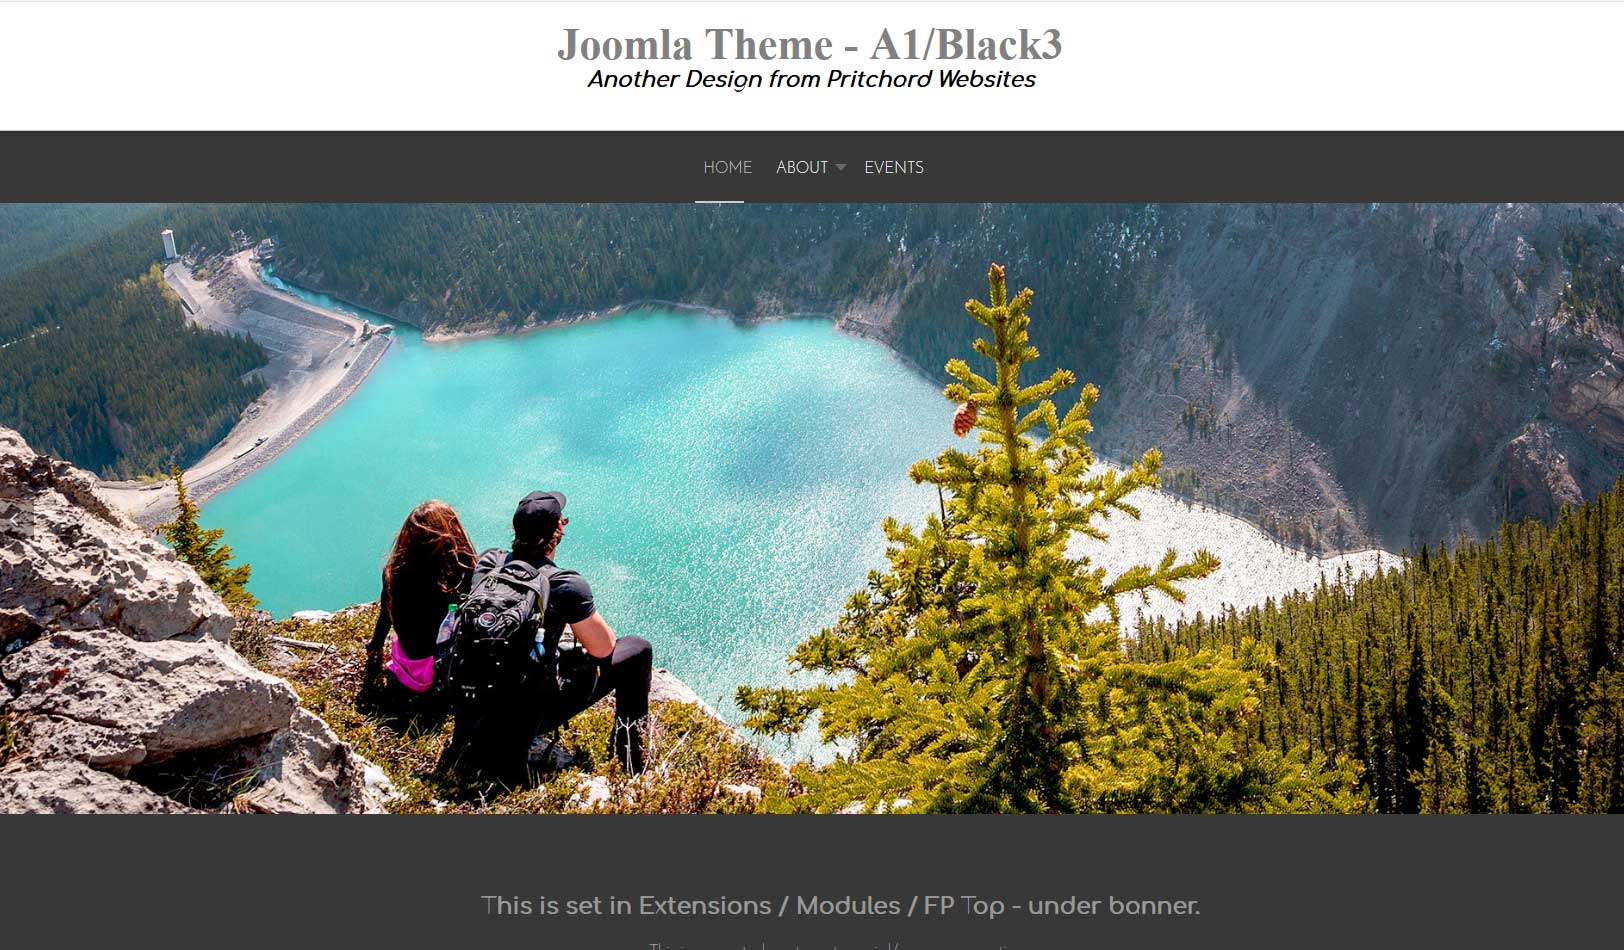 images/Portfolio-images/Our-Custom-Website-Themes/custom-website-design-A1-Black3.jpg#joomlaImage://local-images/Portfolio-images/Our-Custom-Website-Themes/custom-website-design-A1-Black3.jpg?width=1624&height=950